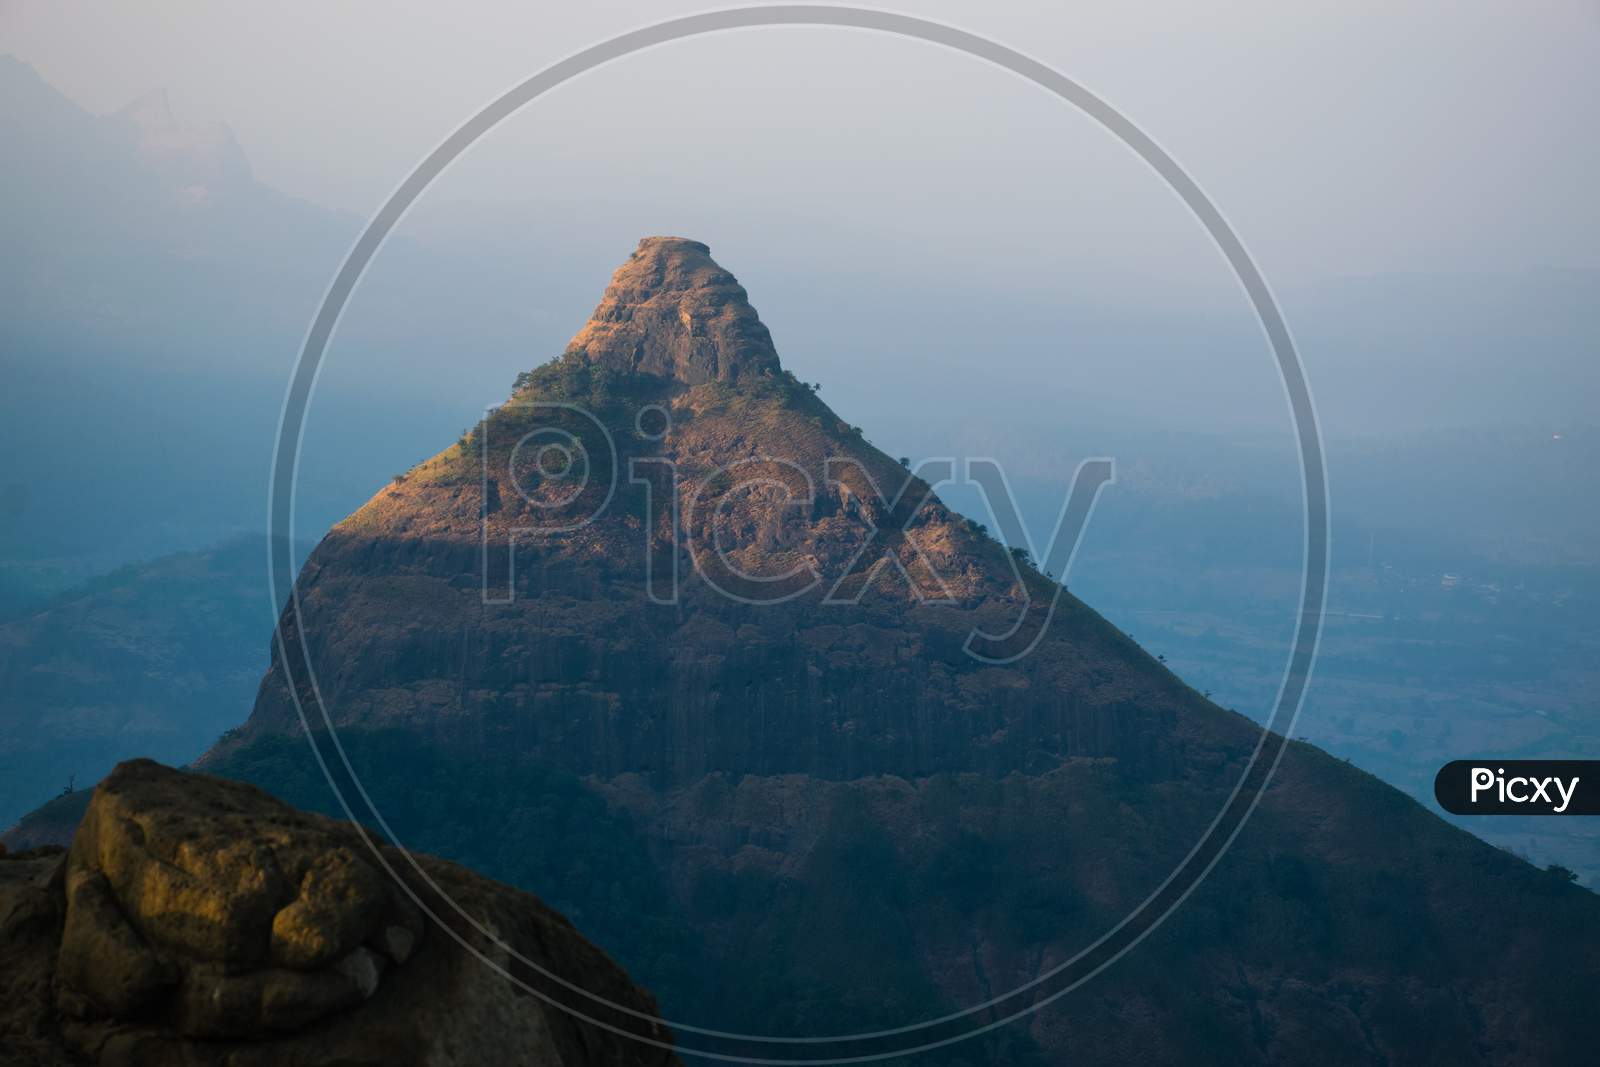 A Mountain Peak at Tiger point, Lonavla situated in Maharashtra, India